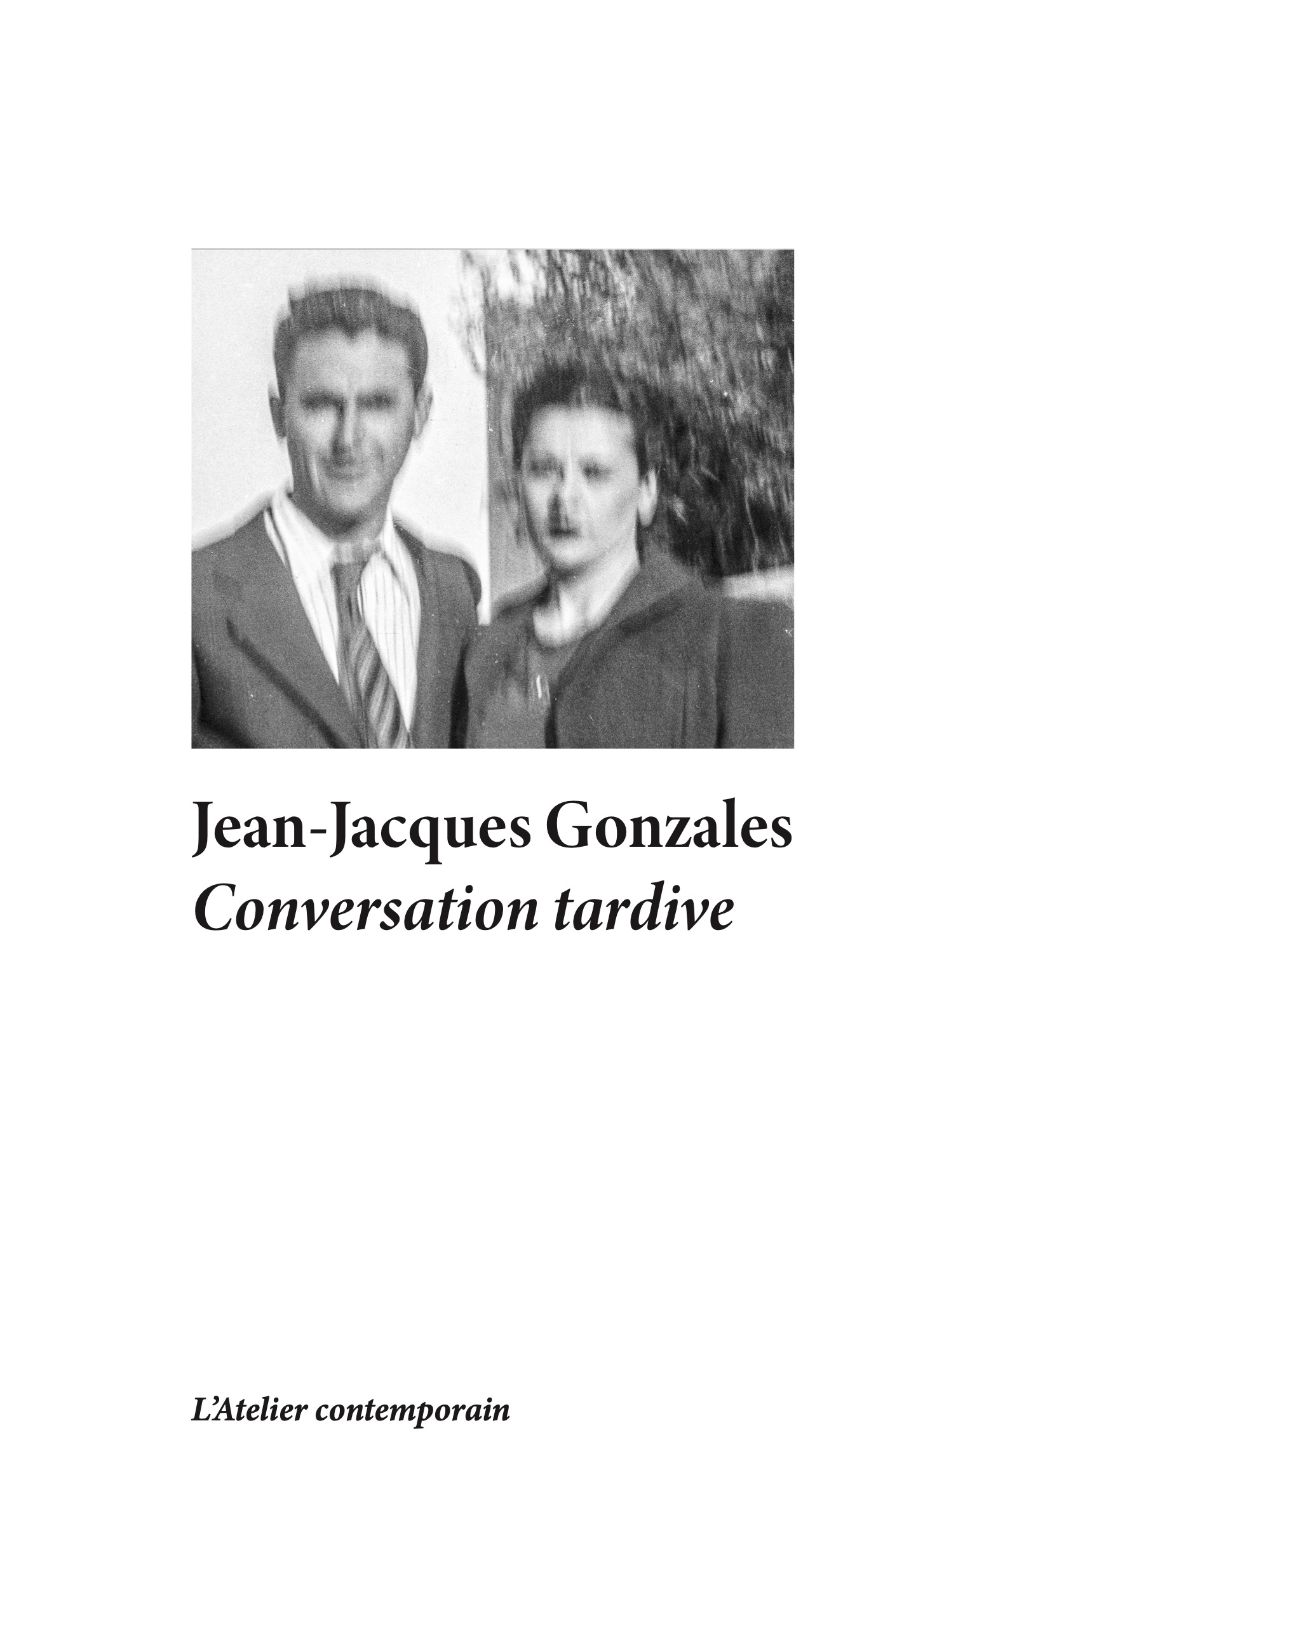 J.-J. Gonzales, Conversation tardive